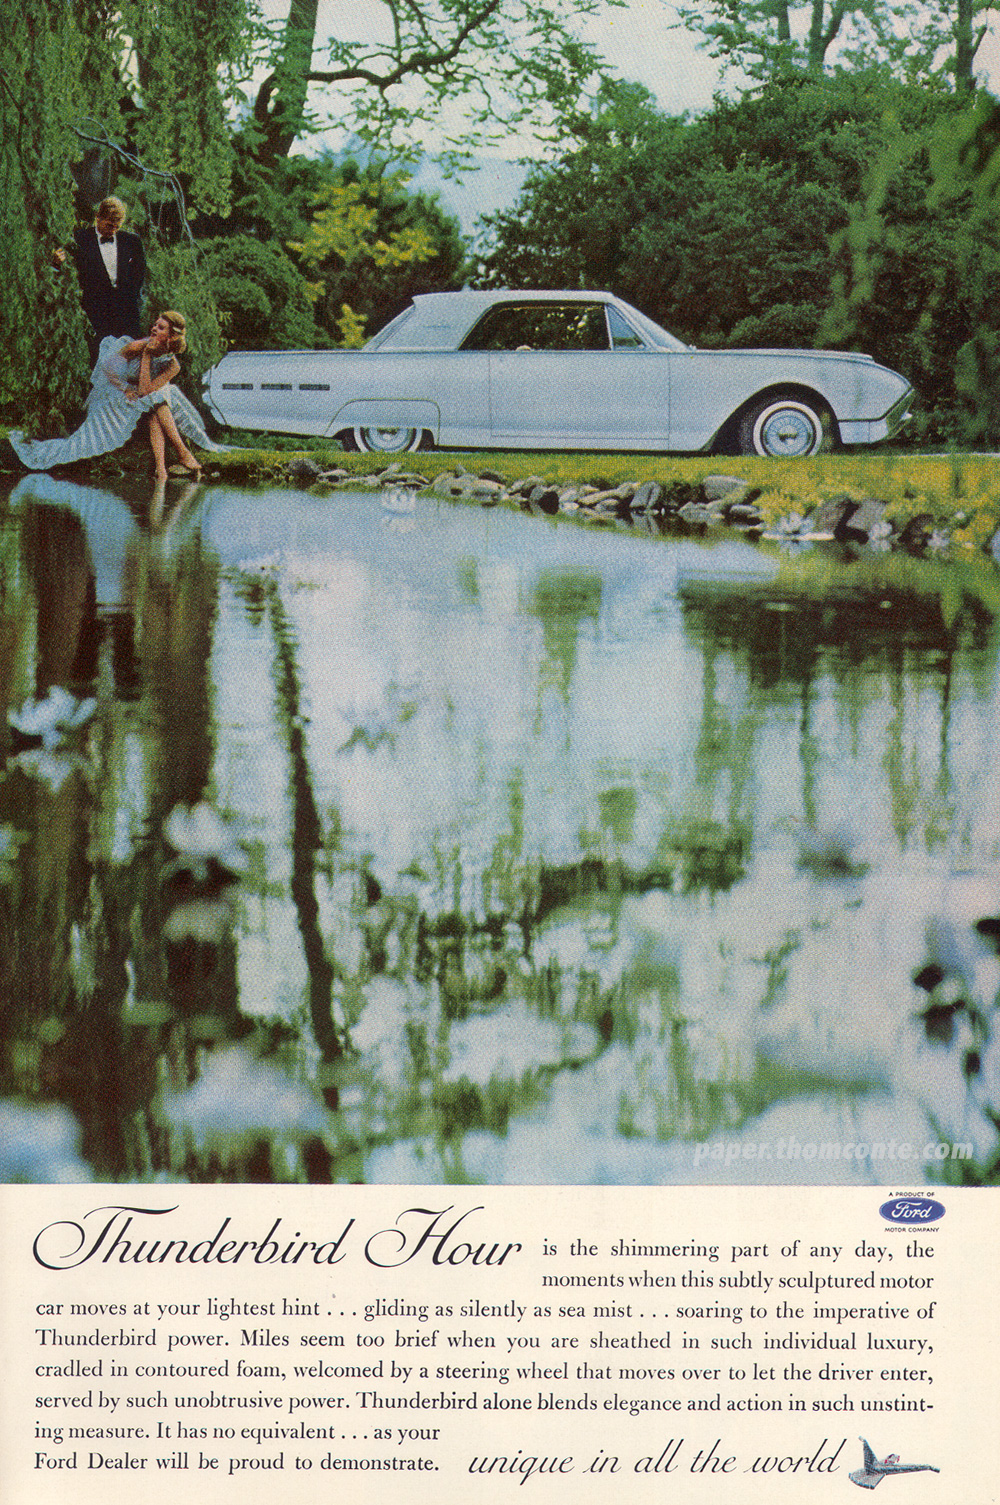 Ford Thunderbird adertisement